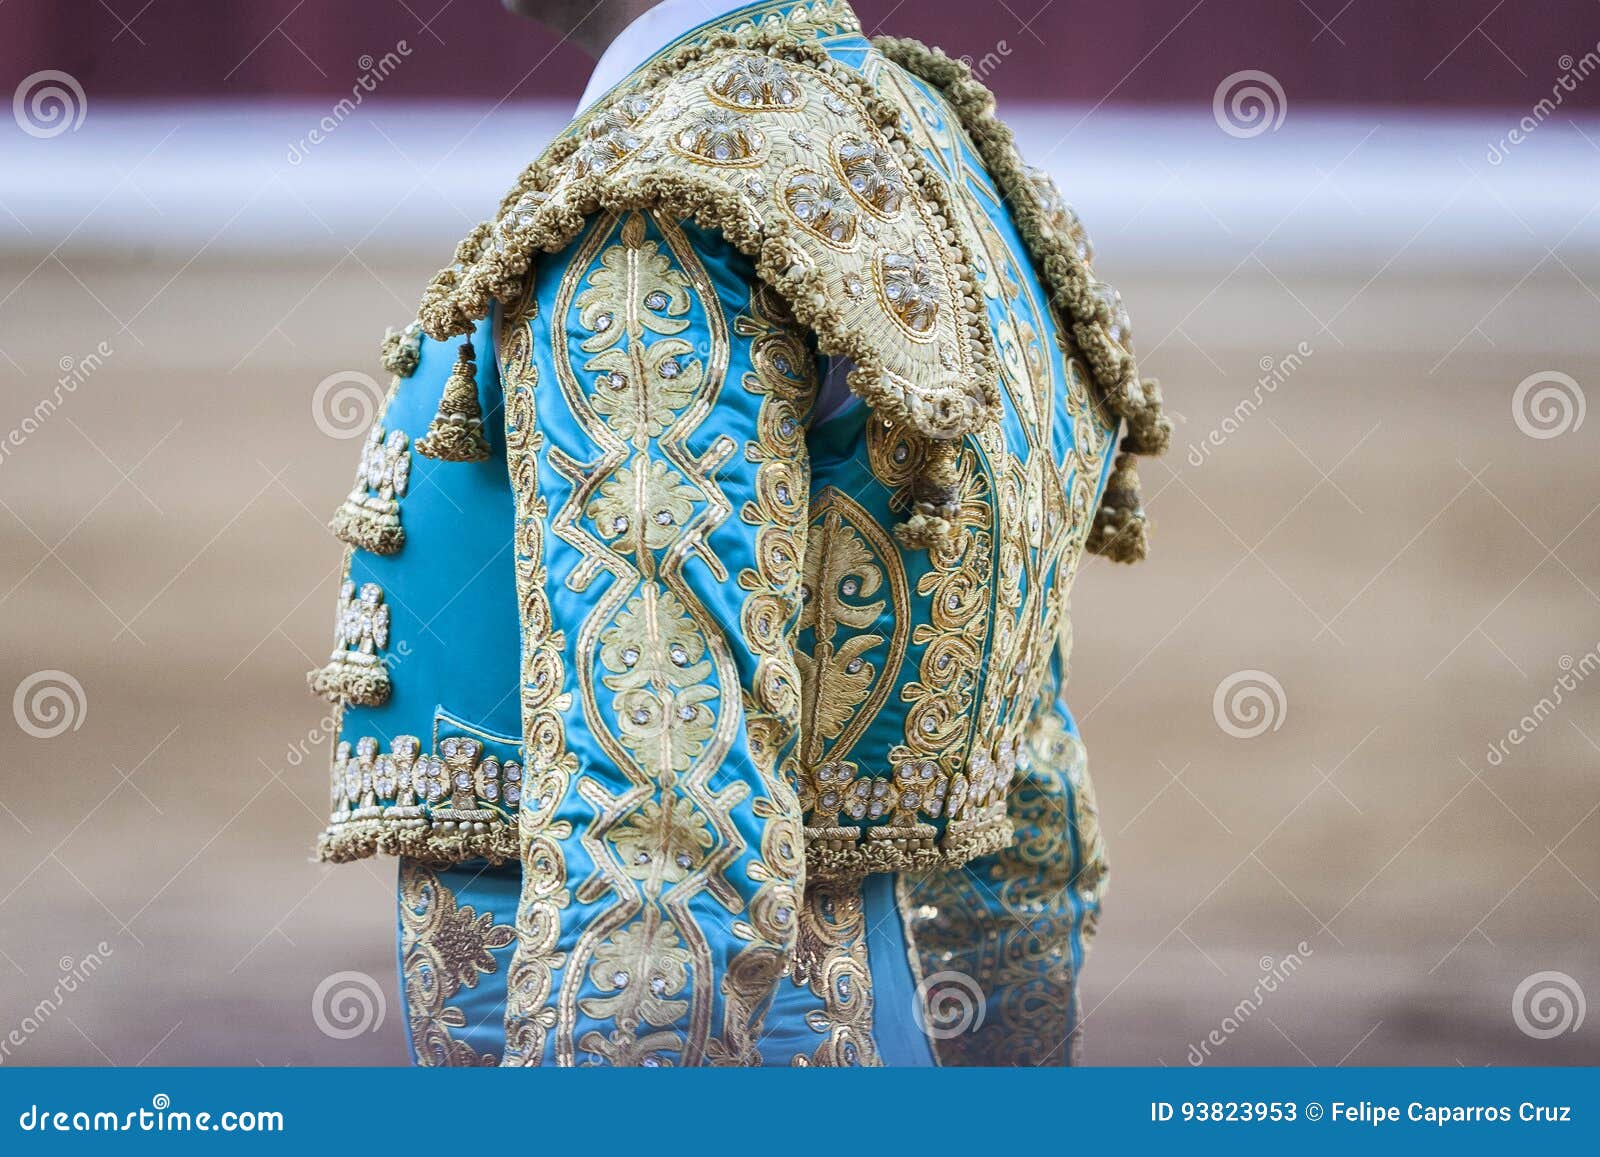 detail of the `traje de luces` or bullfighter dress